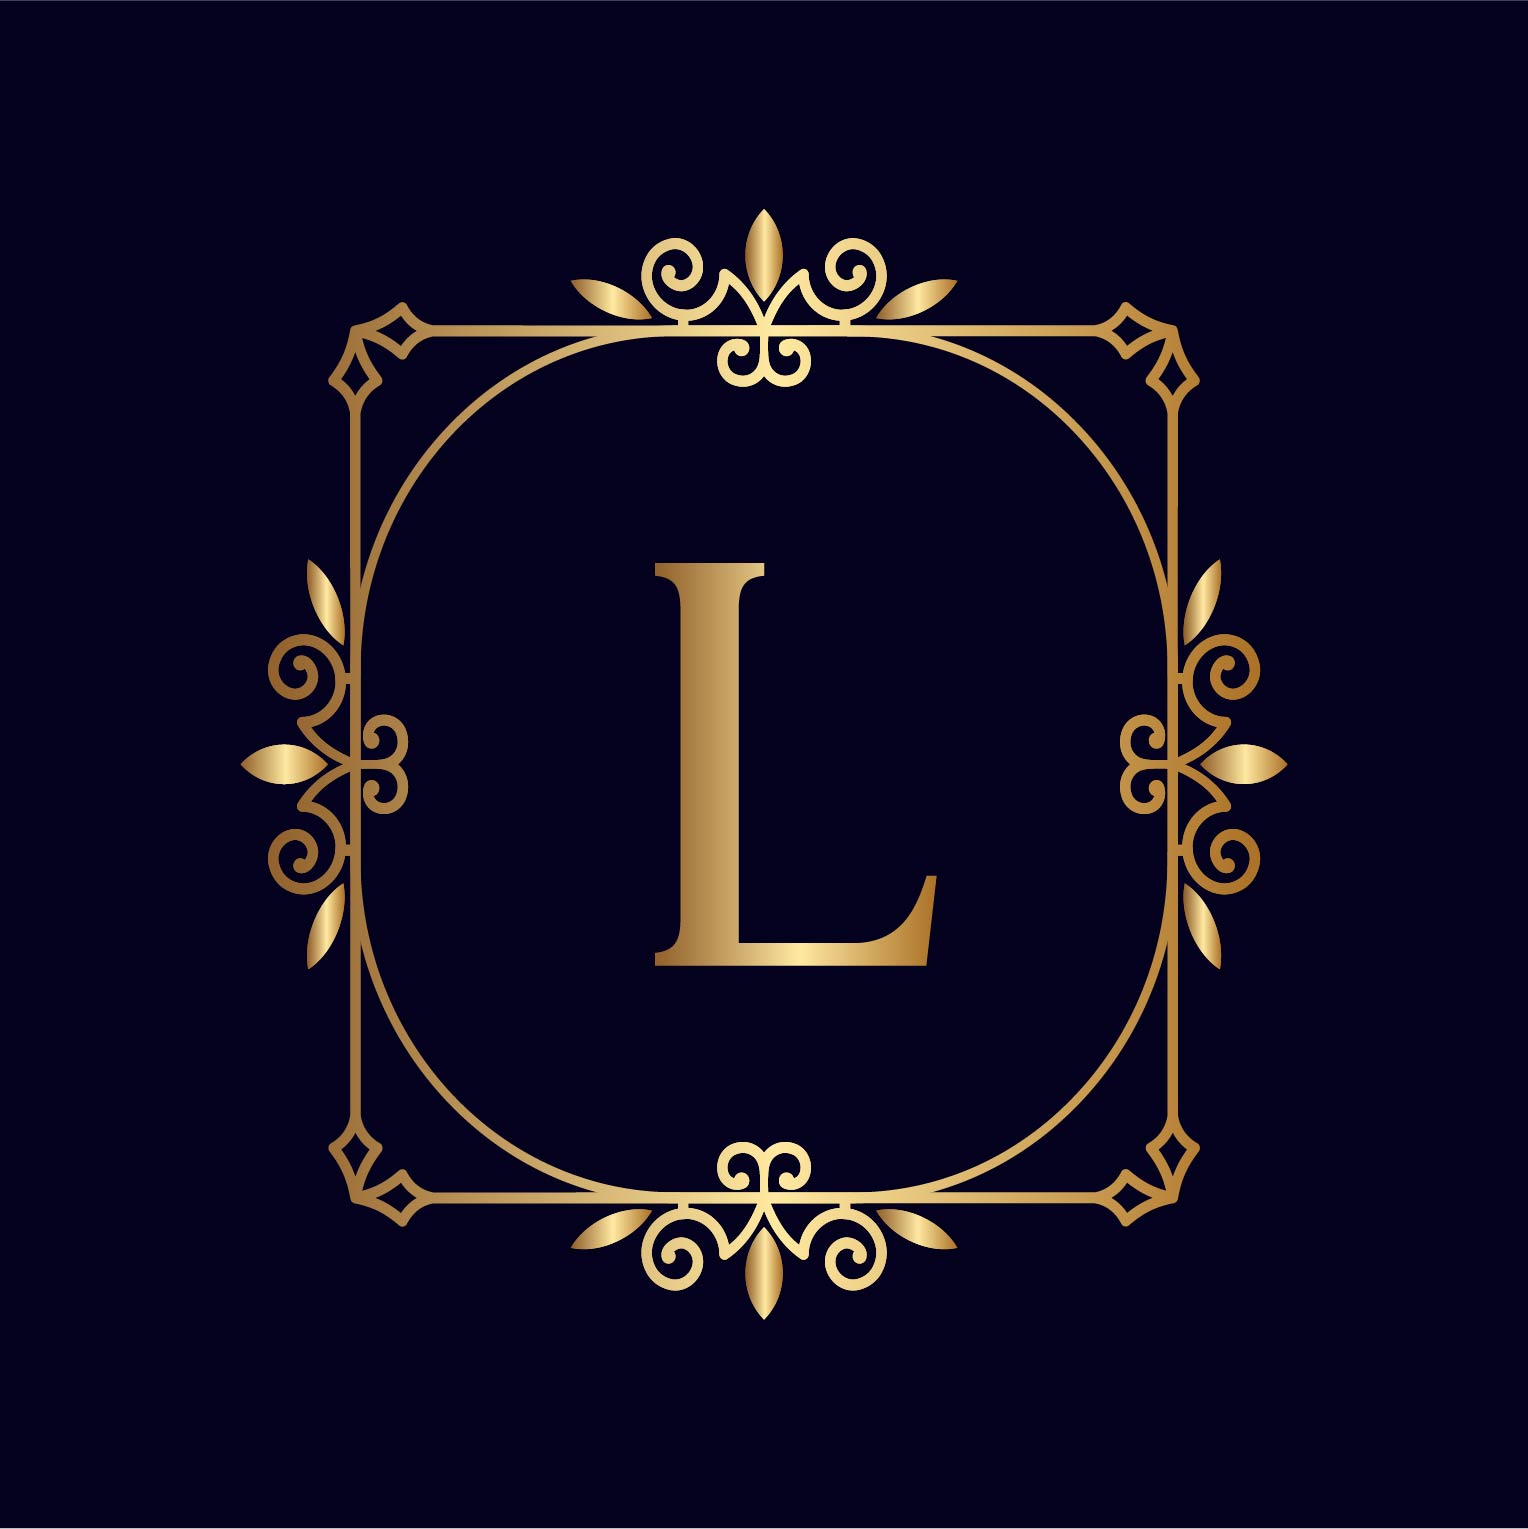 Artistic Gold Letter L Logos Design preview image.